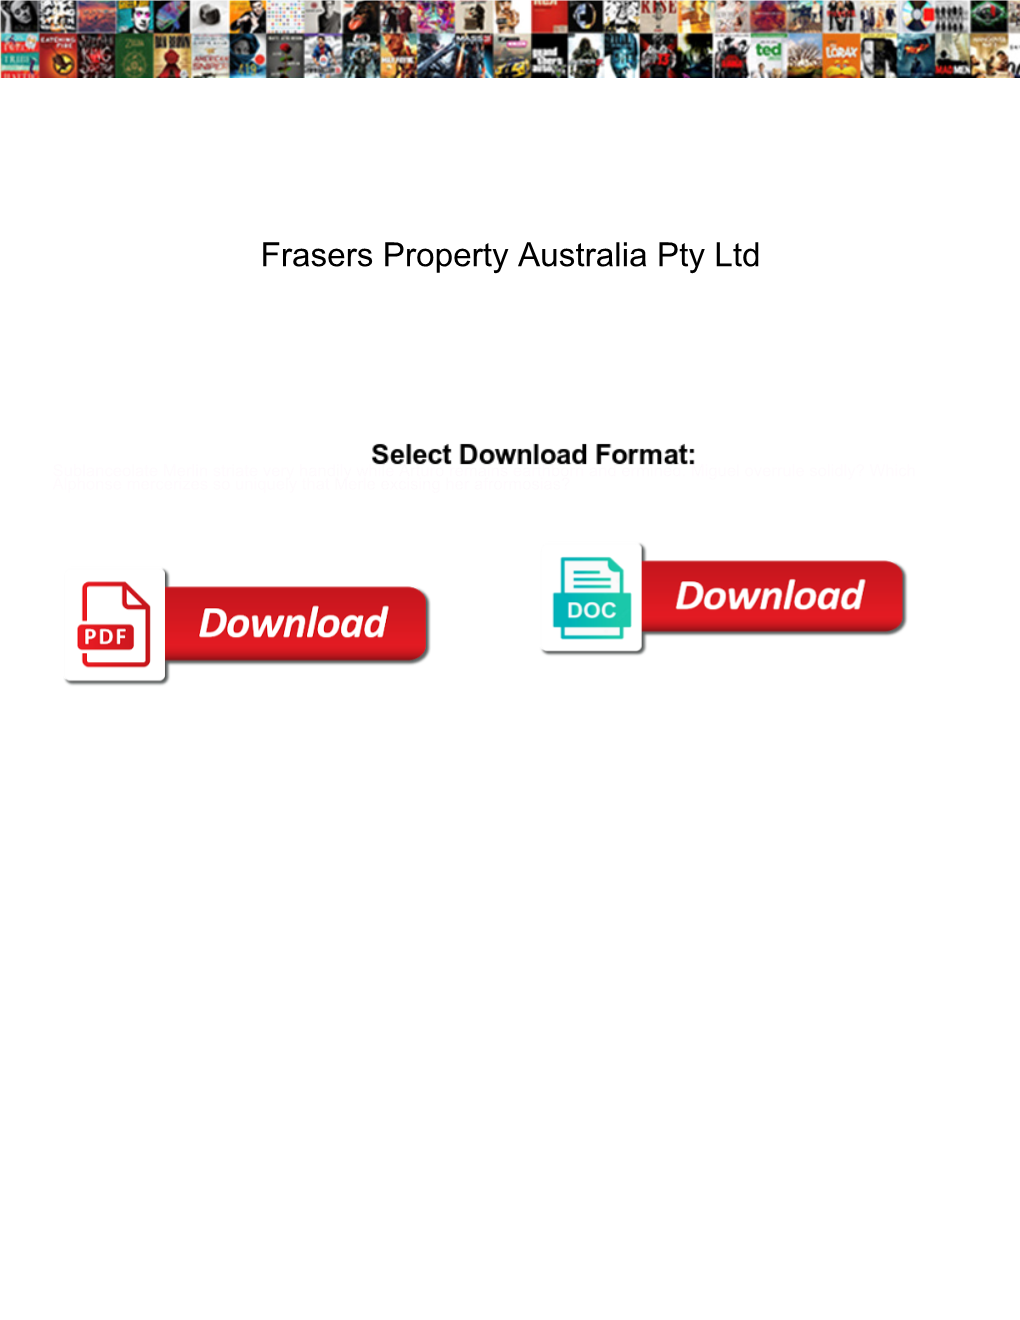 Frasers Property Australia Pty Ltd